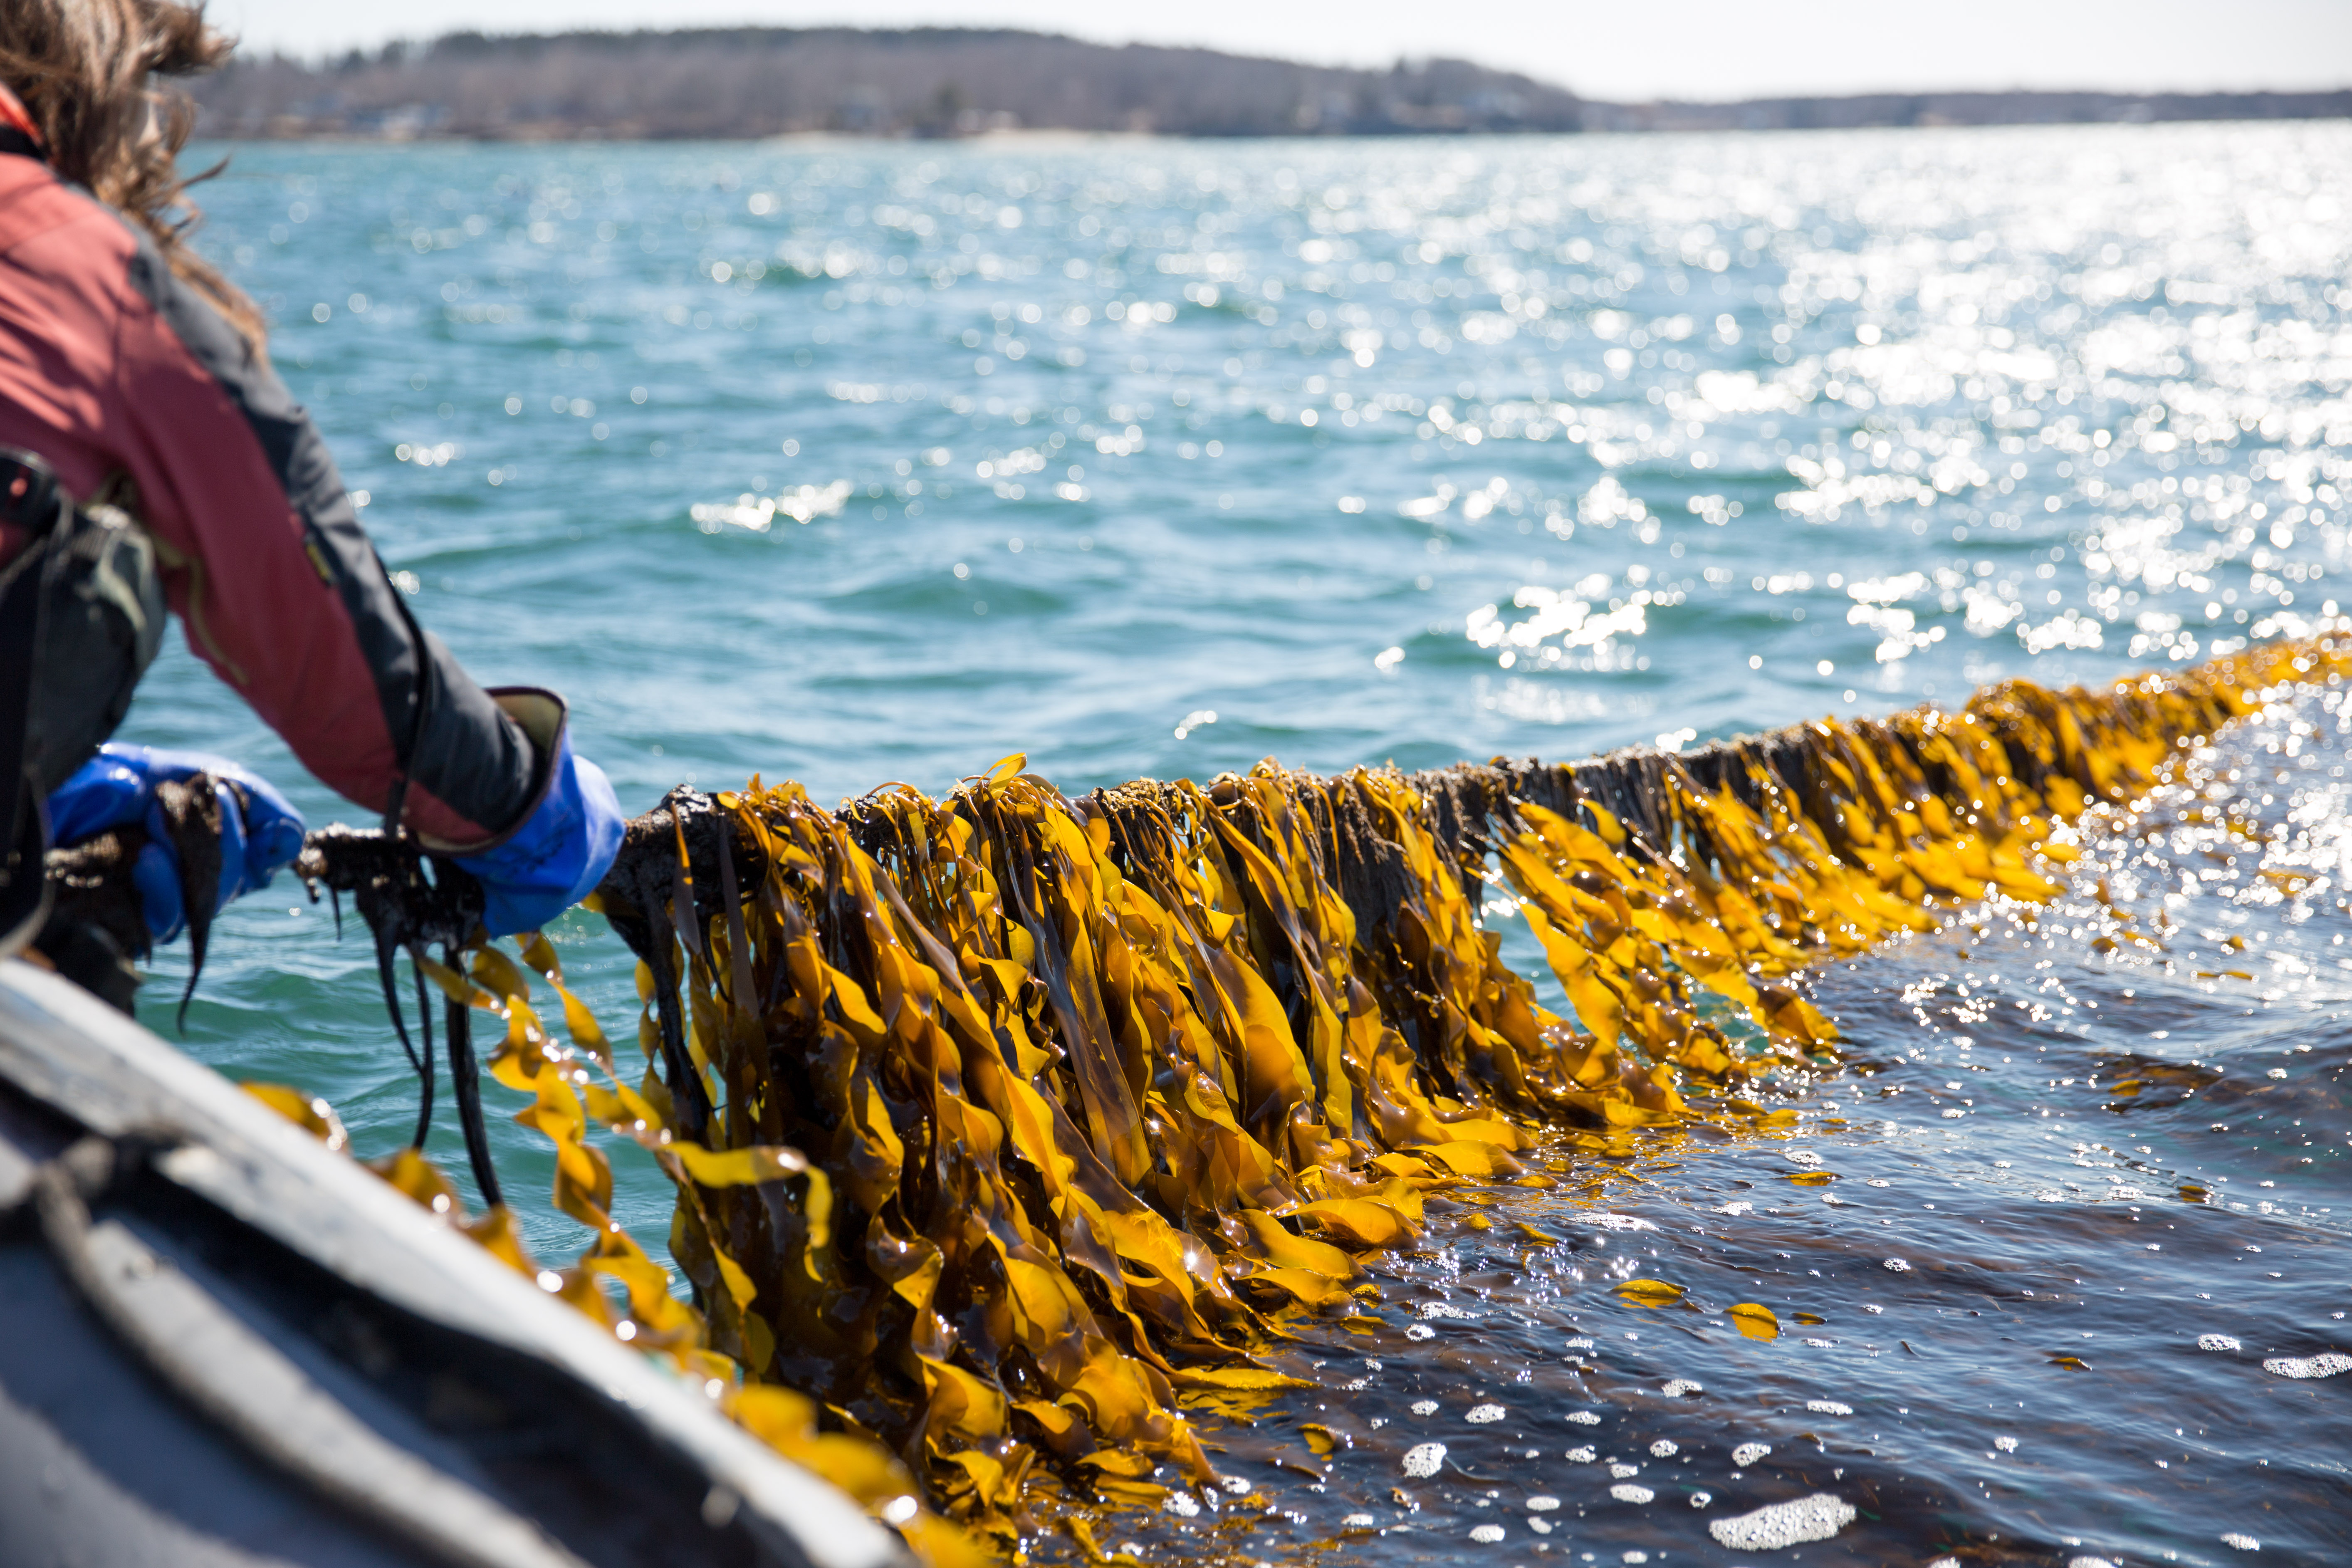 Kelp farmers pulls kelp out of water onto boat